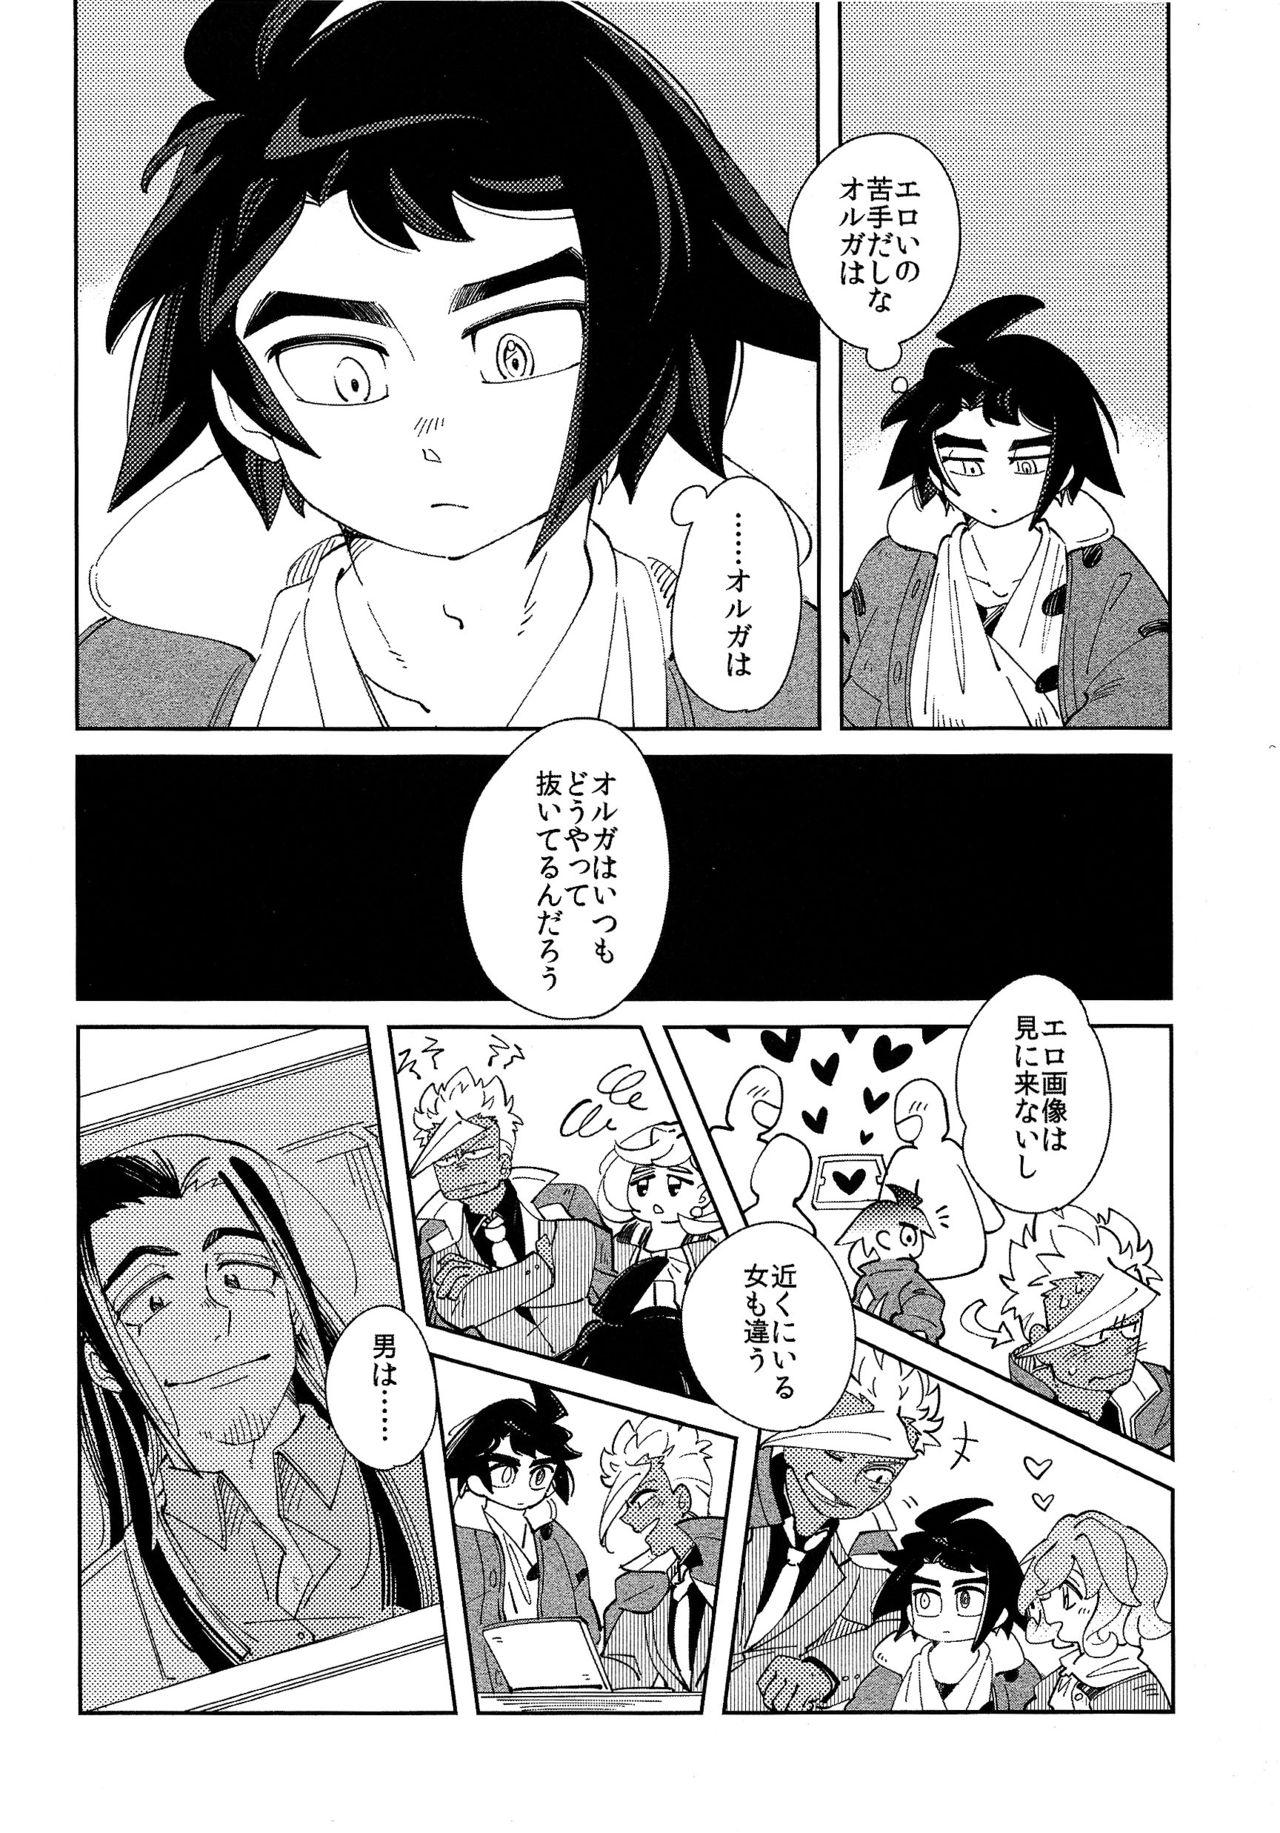 Spooning Moufu no Nakami wa? - Mobile suit gundam tekketsu no orphans  - Page 5